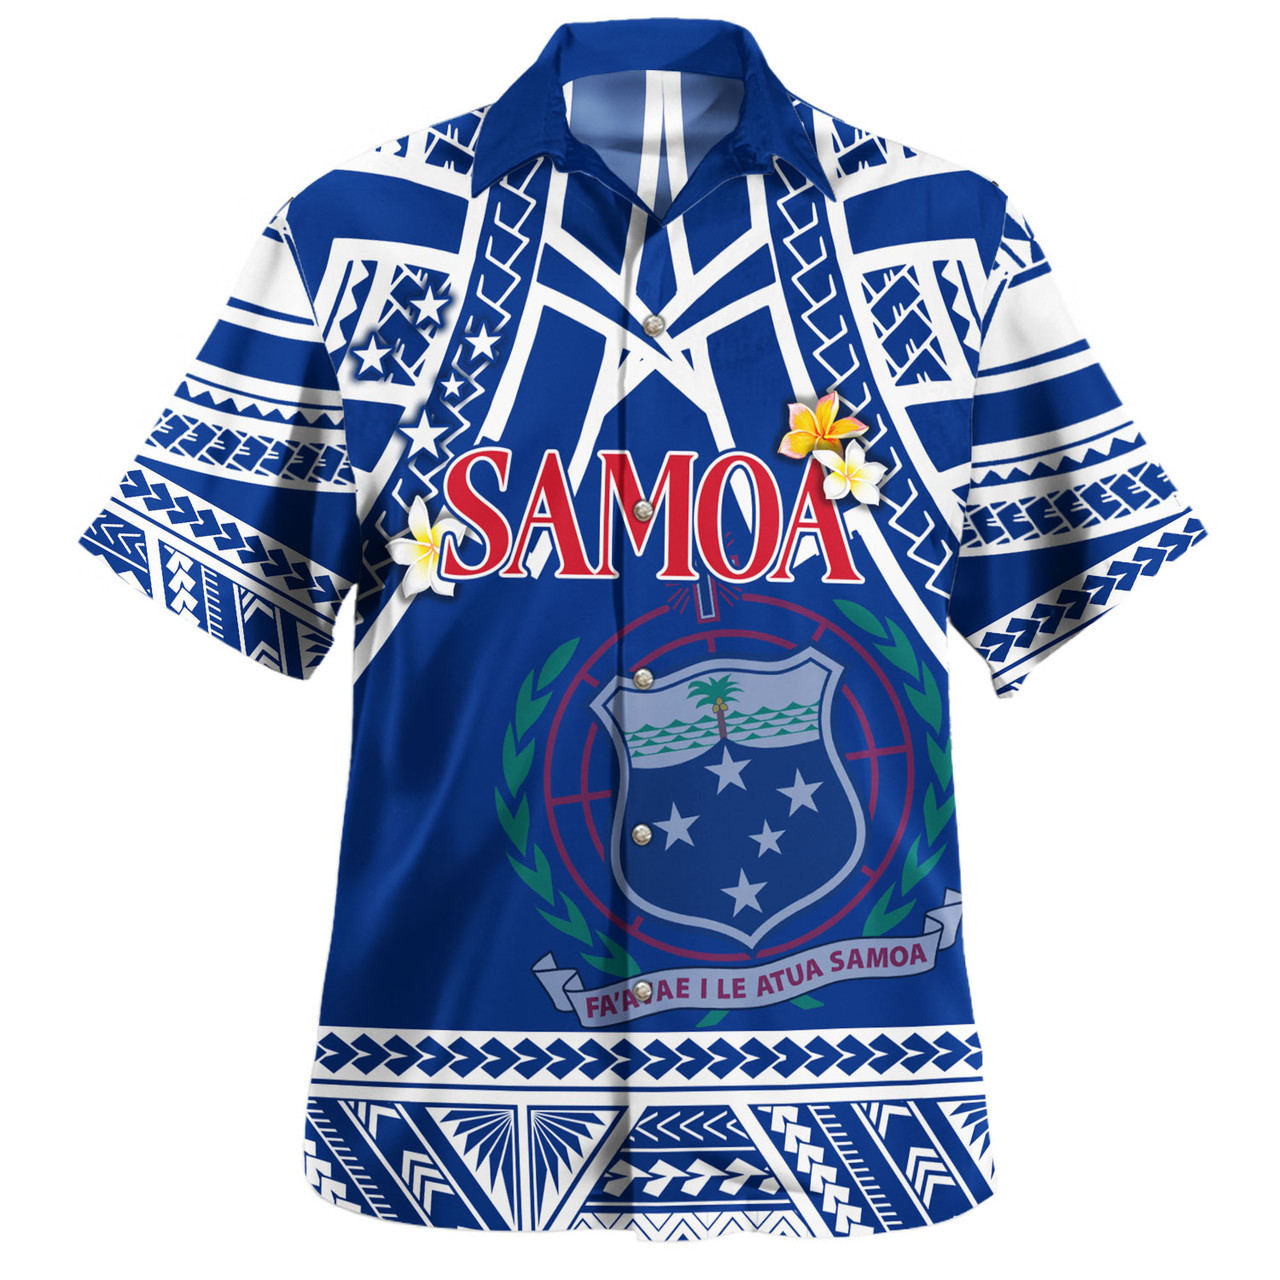 Samoa Custom Personalised Hawaiian Shirt Polynesian Plumeria Flowers Mix Tribal Patterns